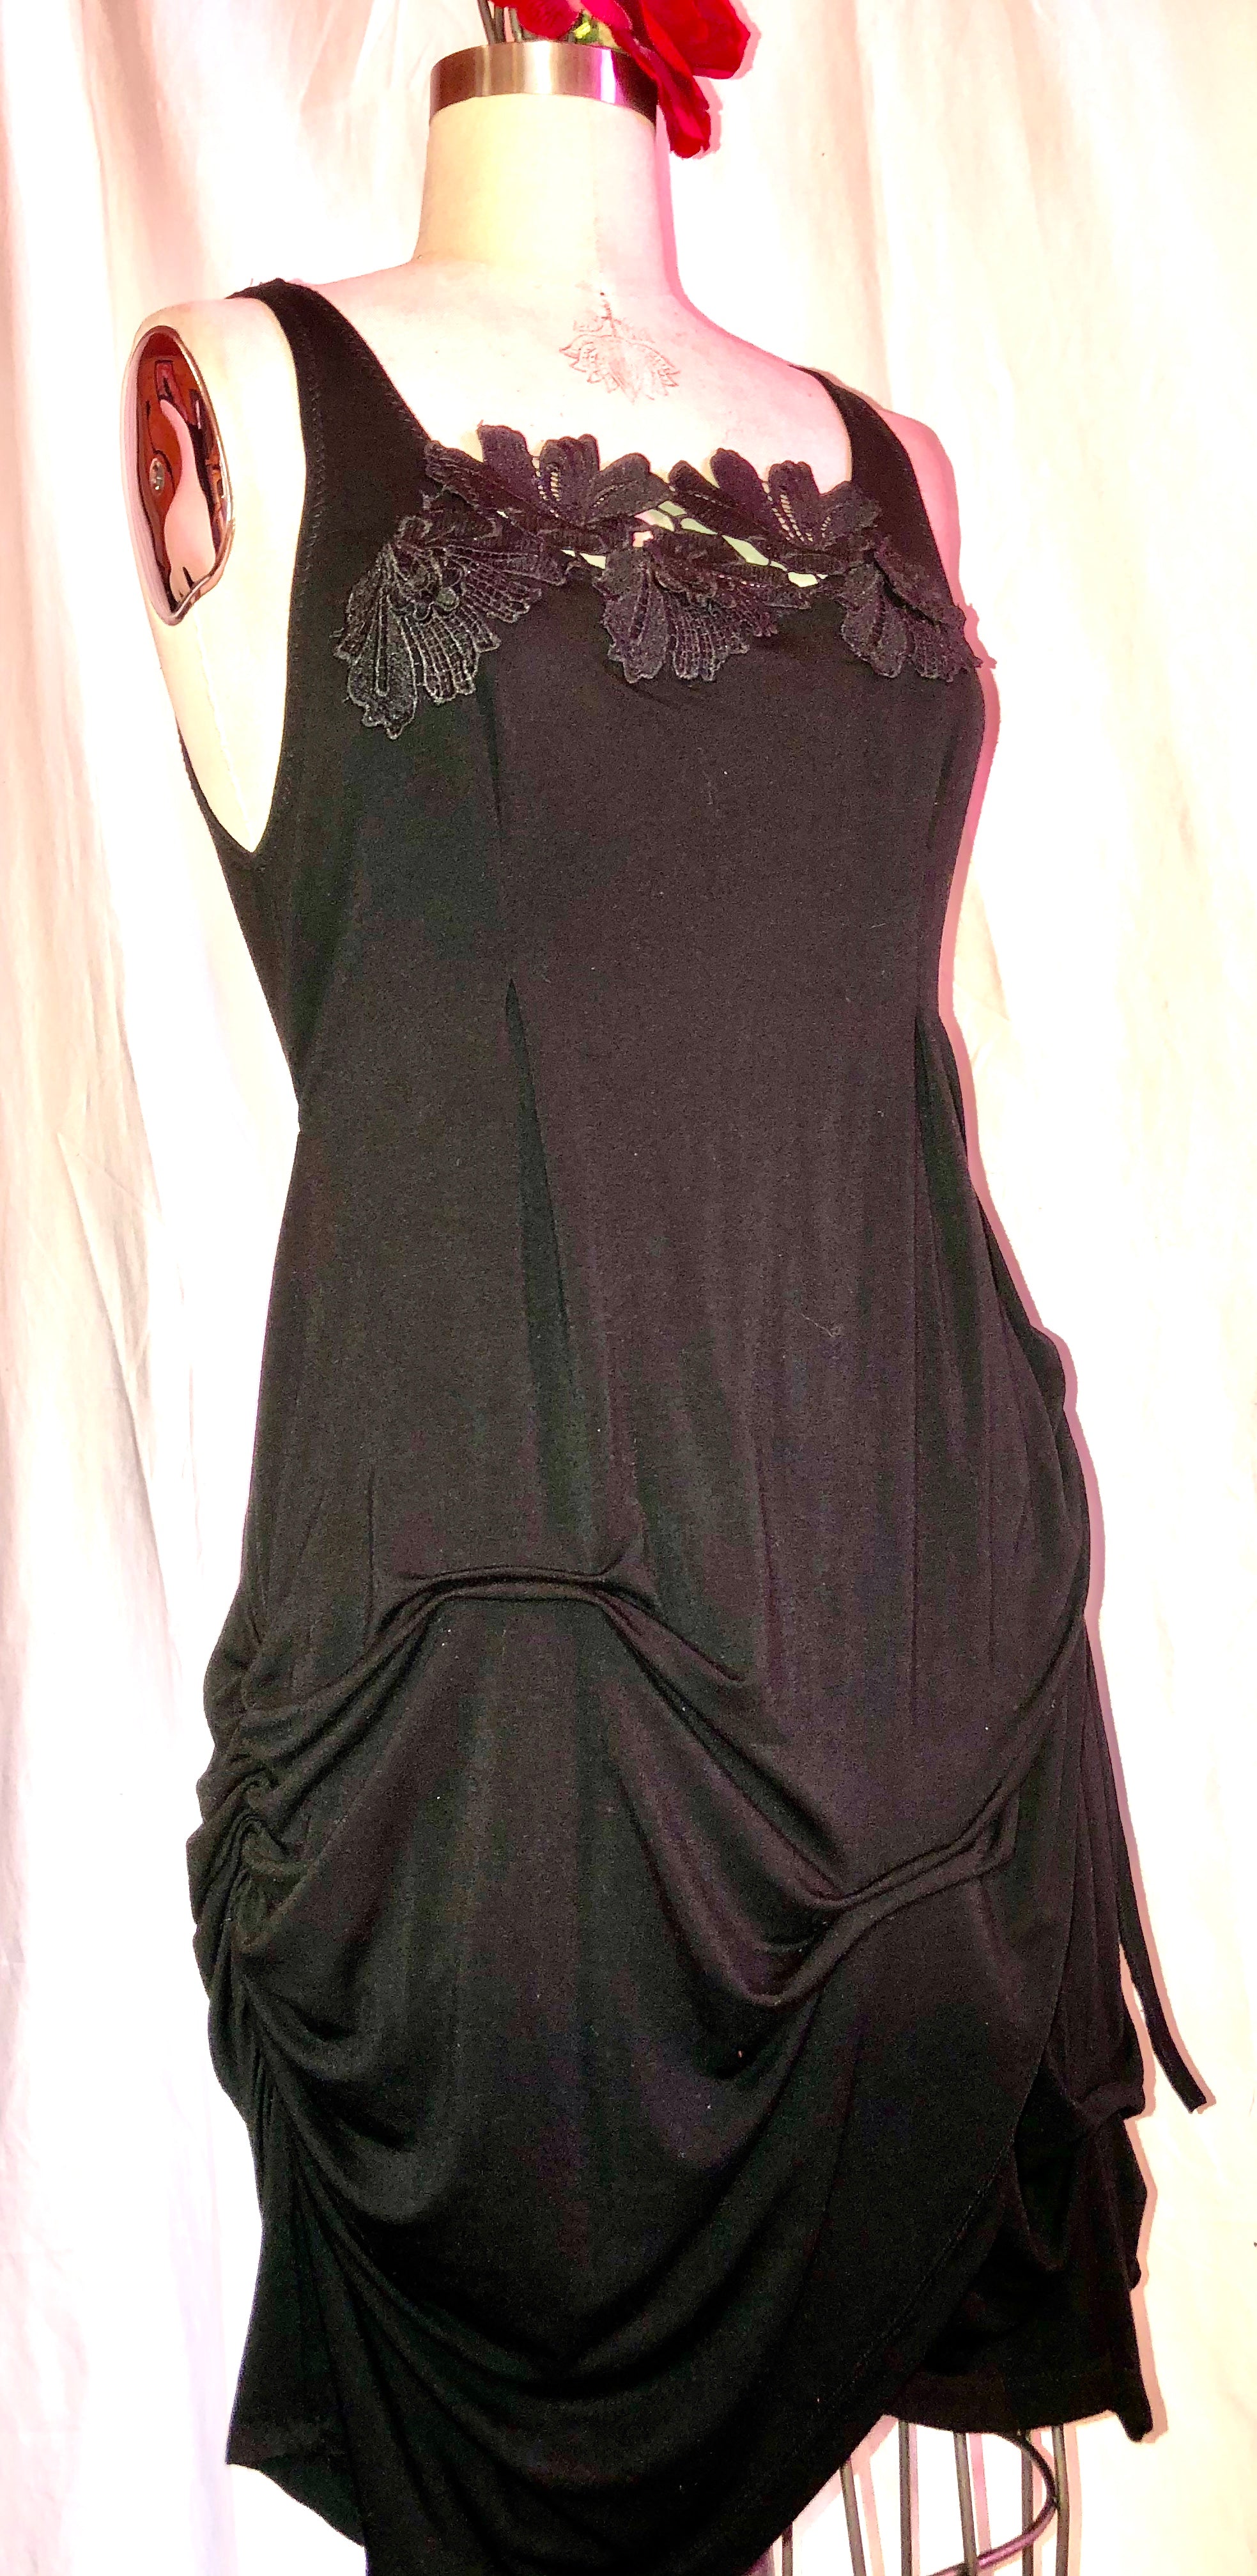 Black Stretch Knit Dress